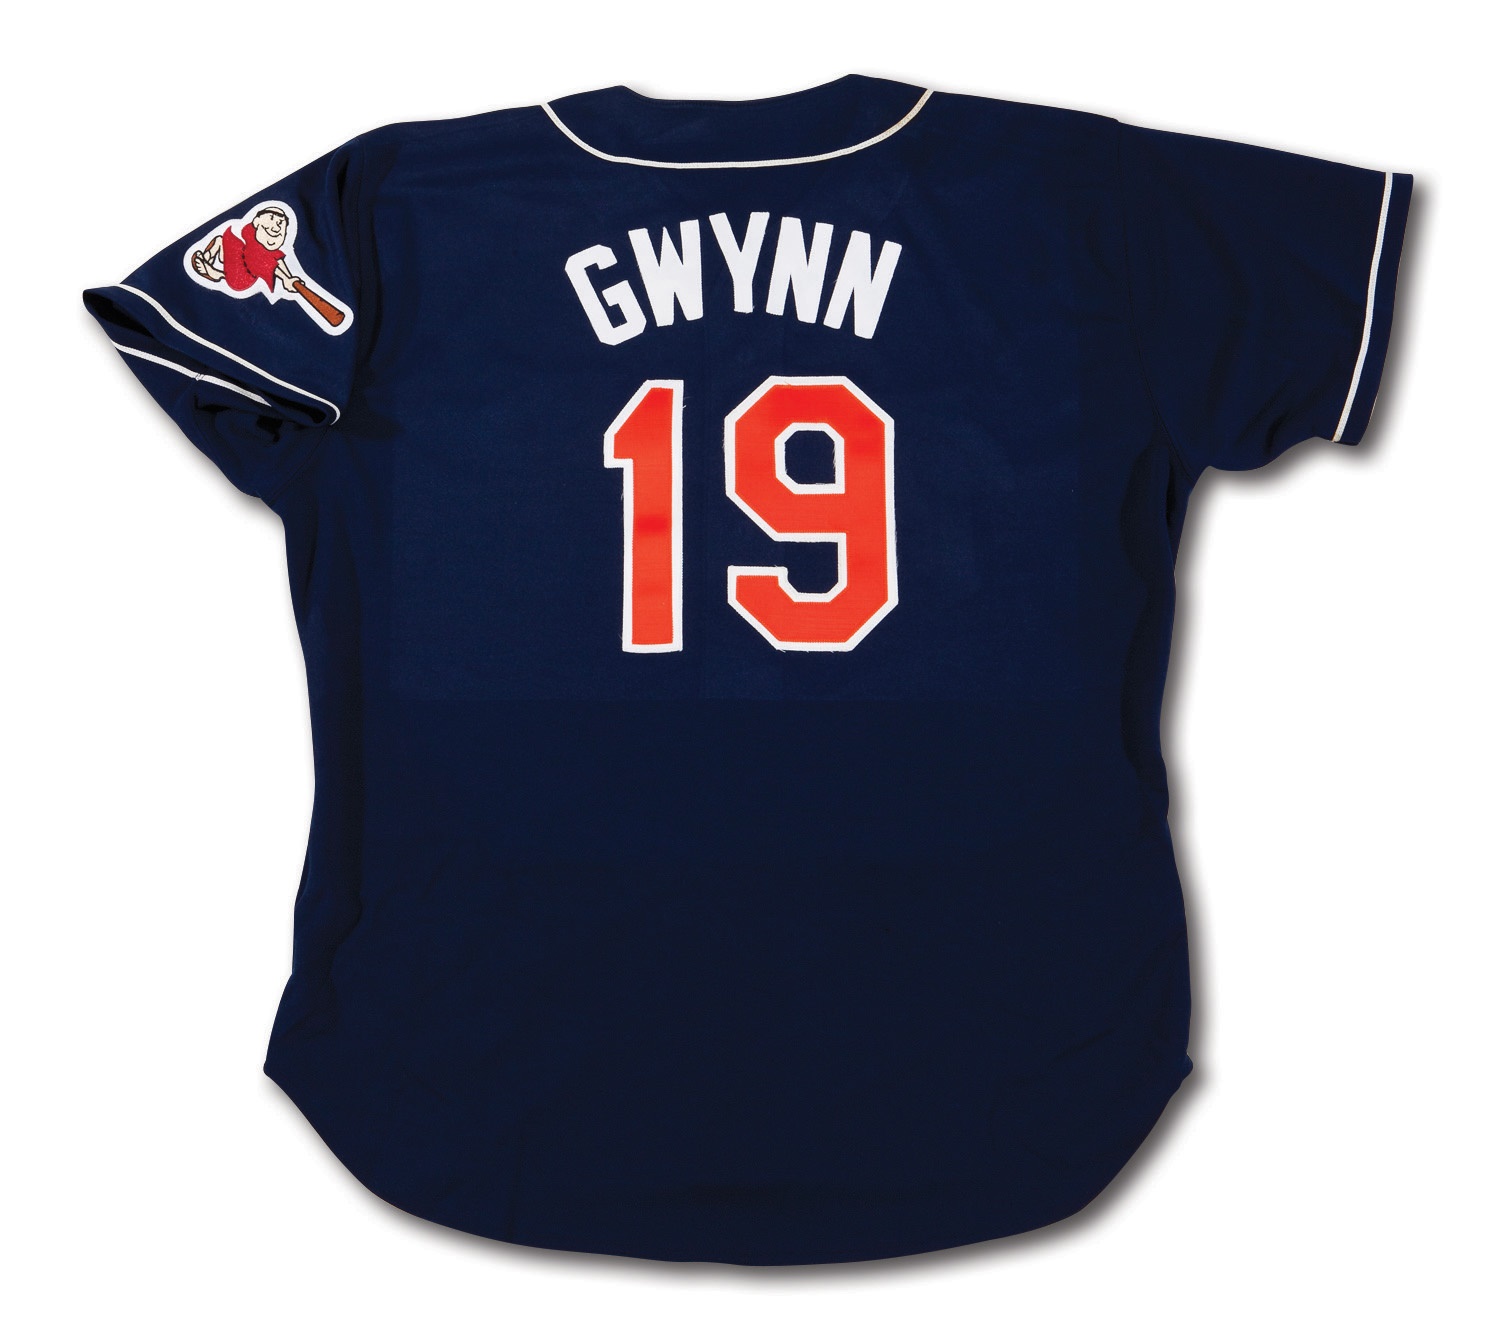 1997 Tony Gwynn Hit #2,722 Game Worn & Signed San Diego Padres, Lot #57129